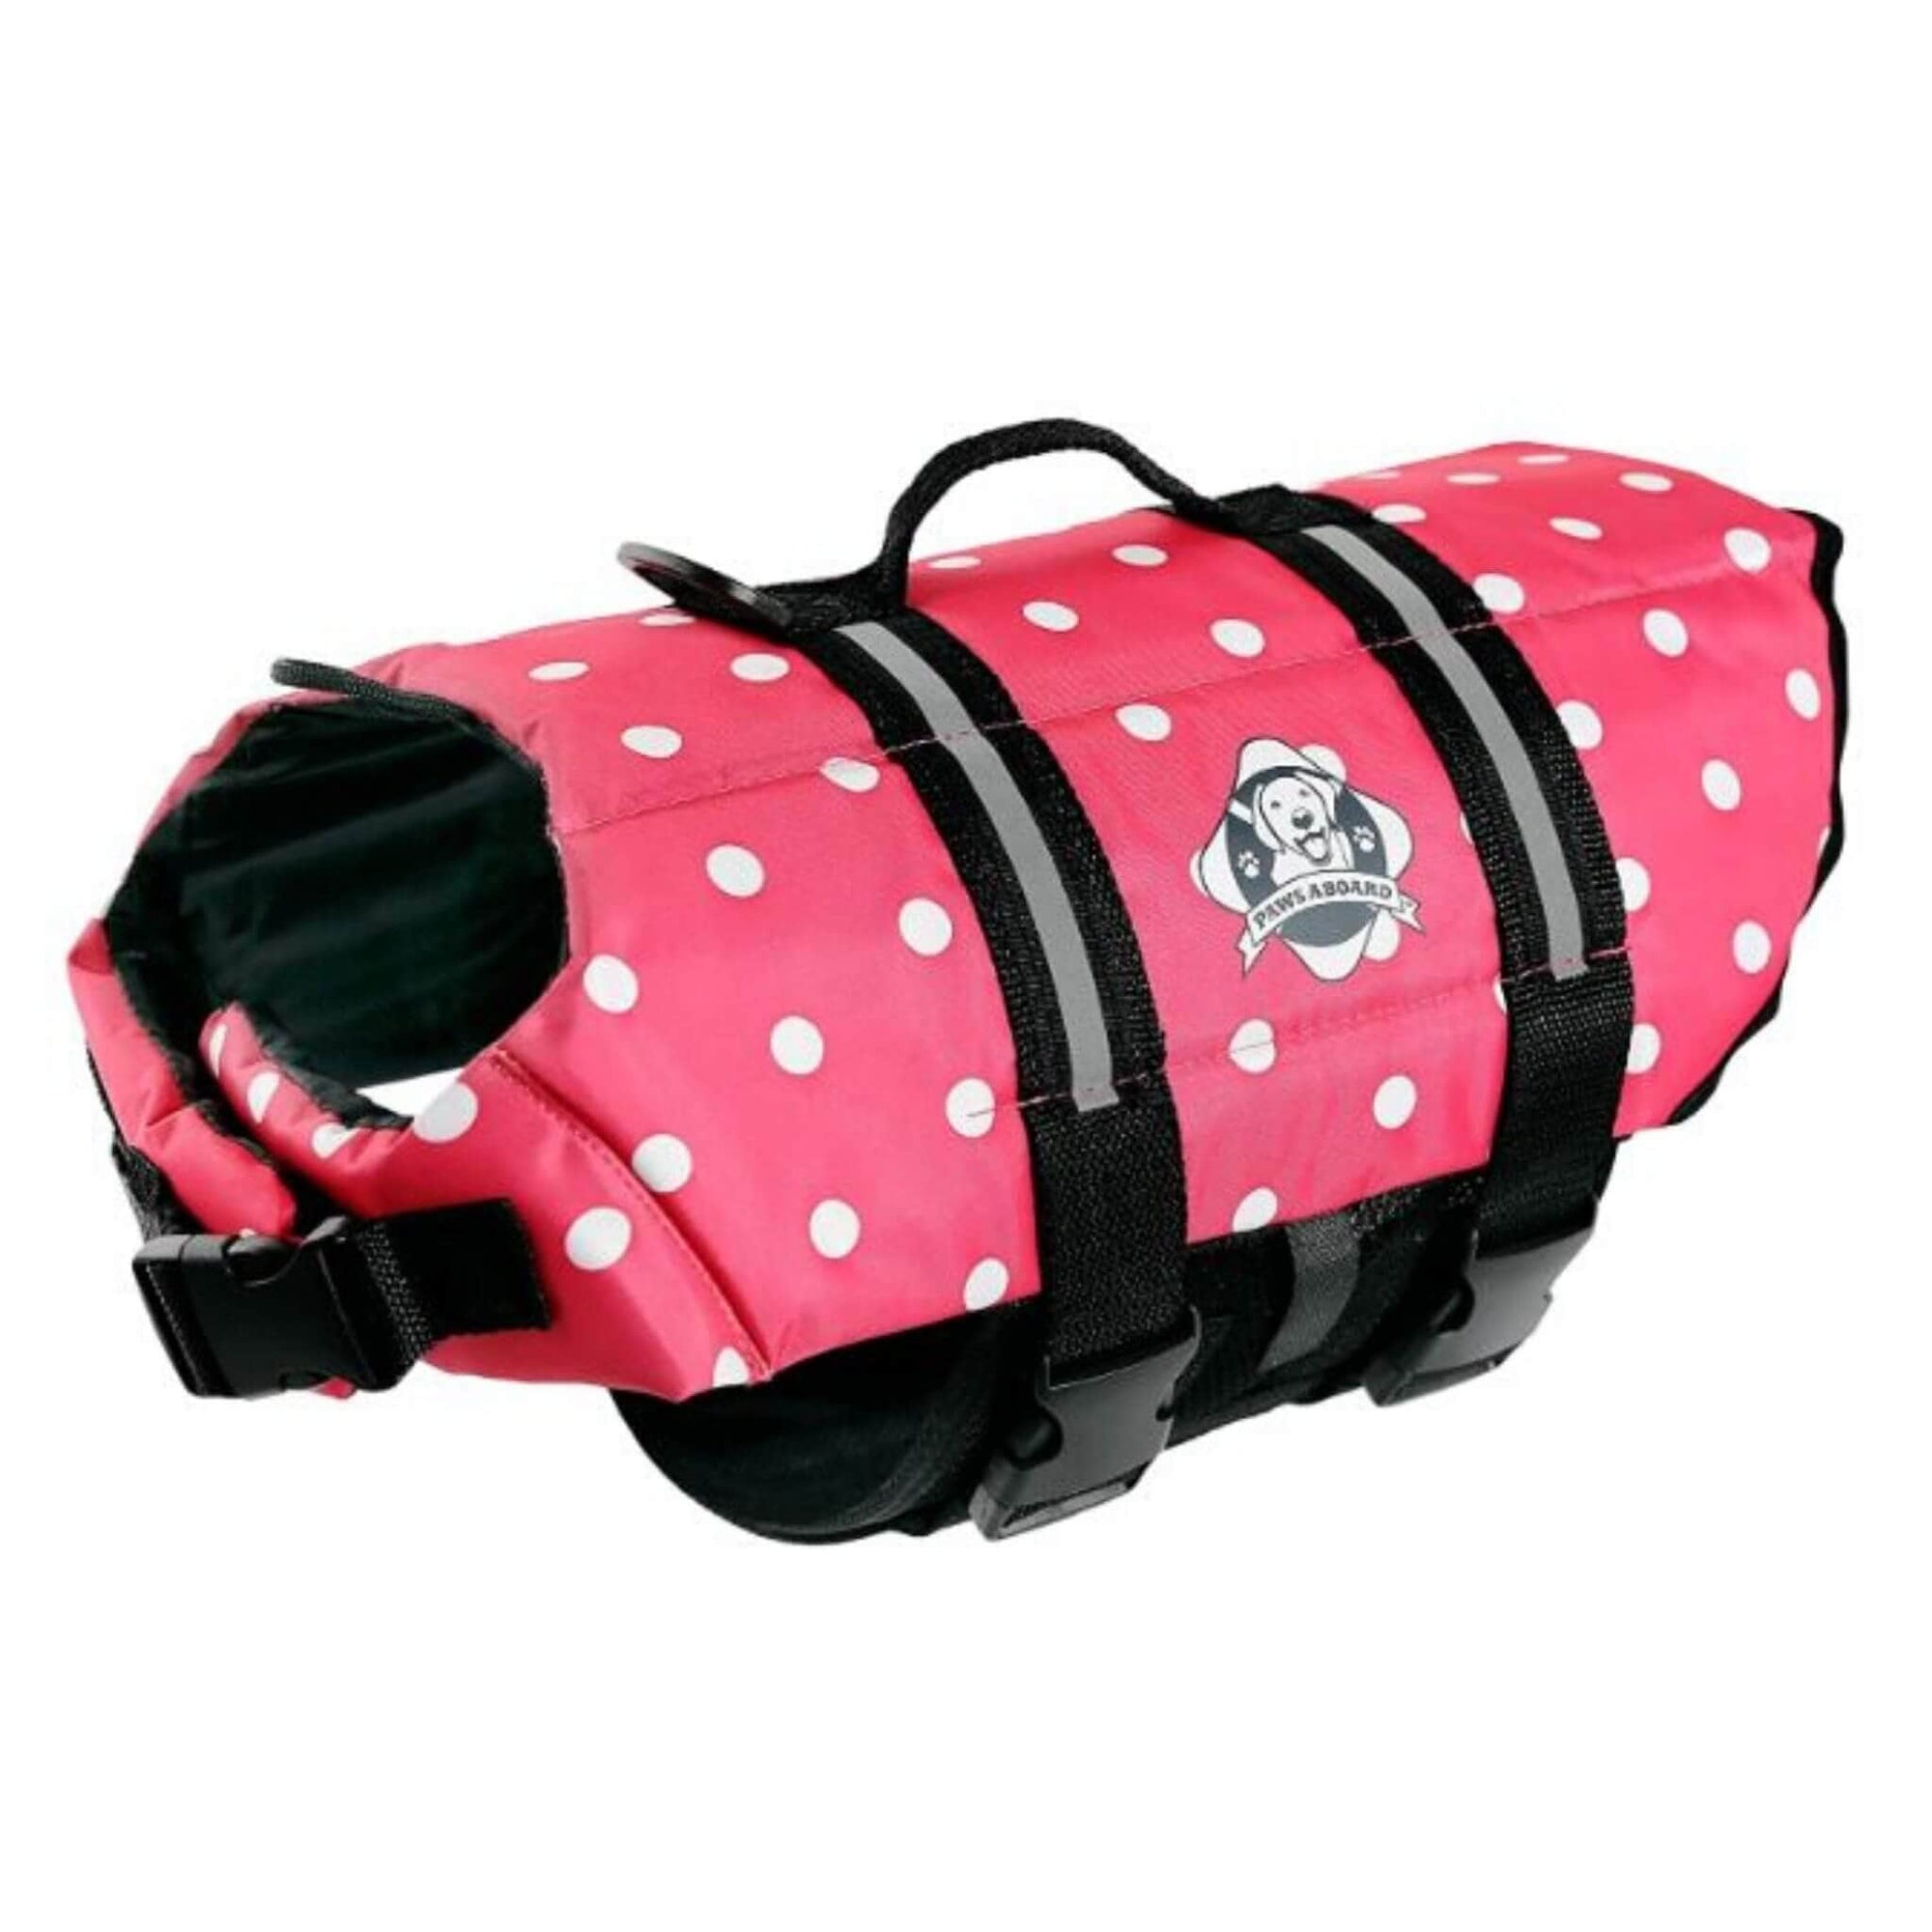 Paws Aboard Dog Life Jacket - Pink Polka Dot